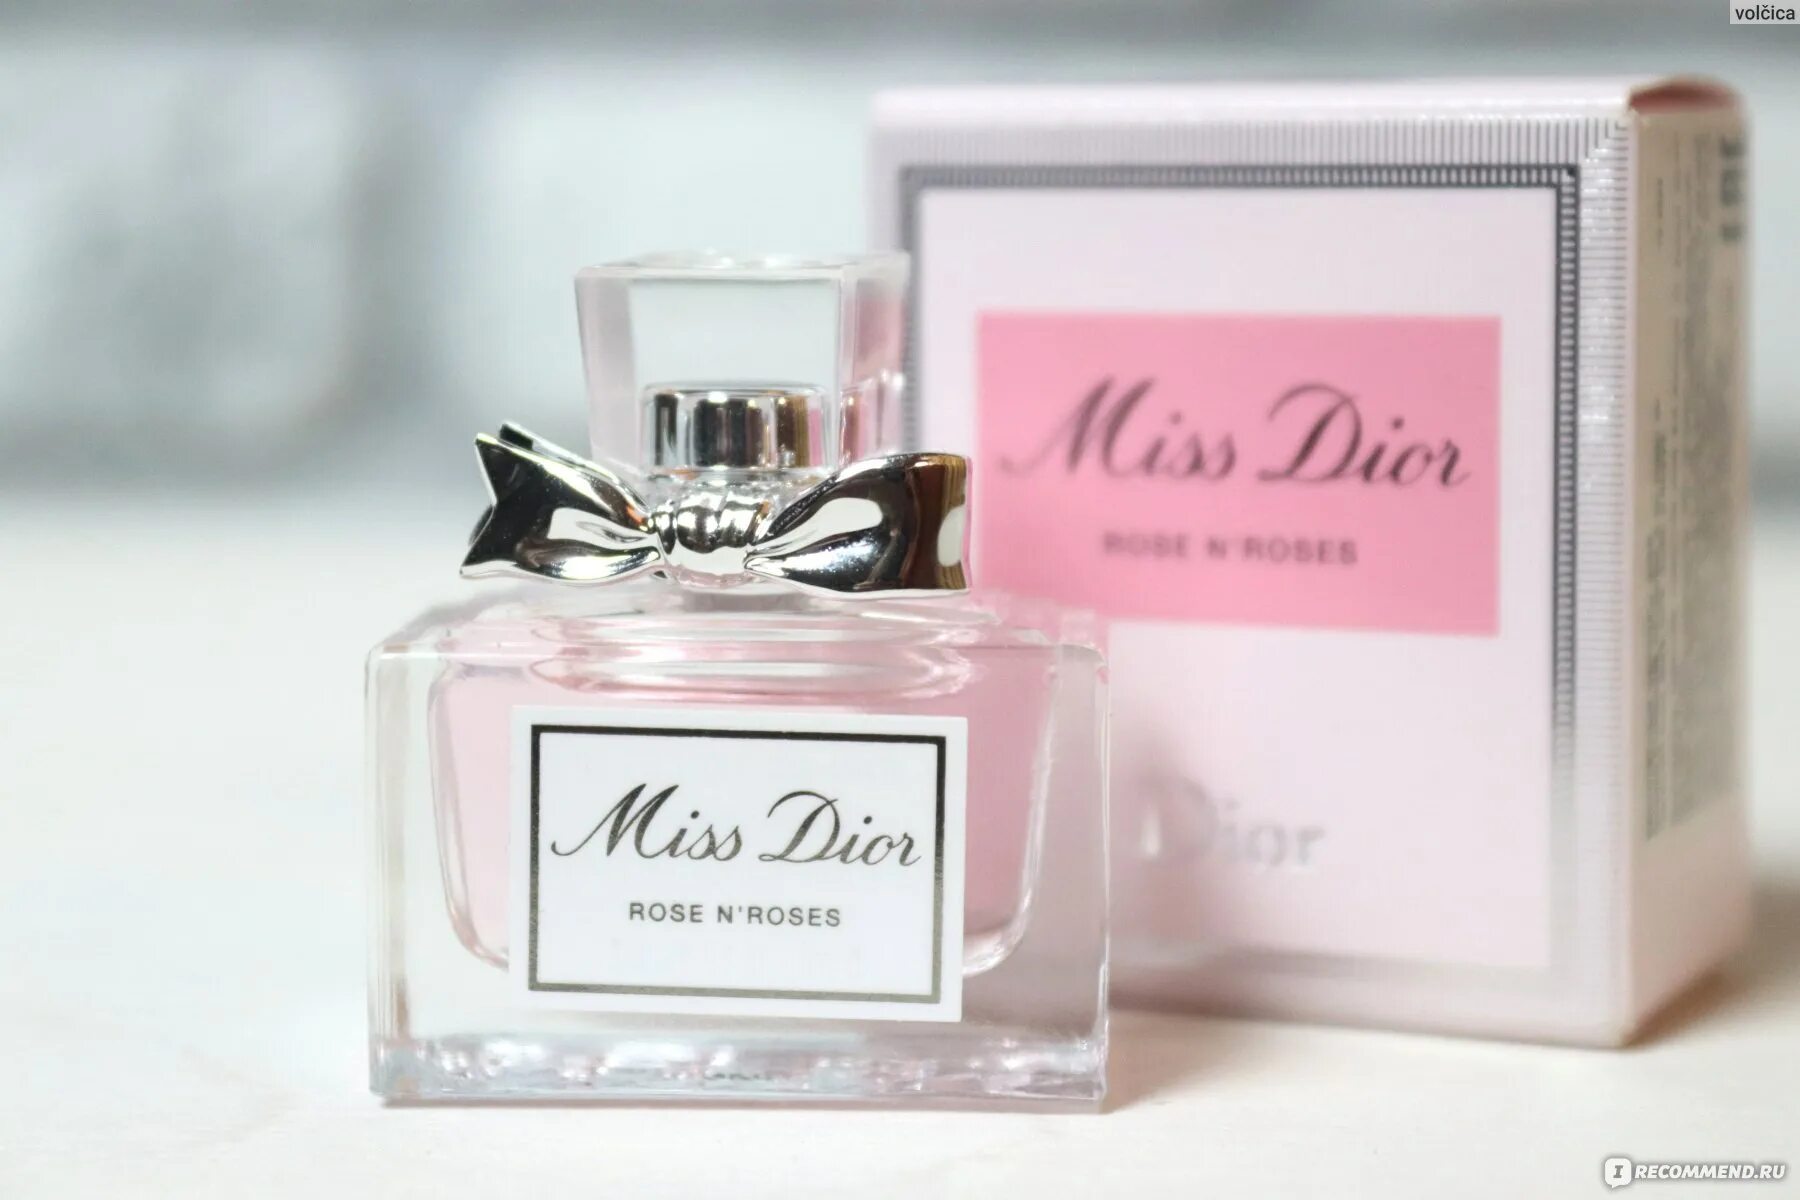 Мисс диор розовые. Dior Miss Dior Rose Essence 100 мл. Christian Dior Miss Dior Rose n'Roses EDP, 90 ml (Luxe евро). Miss Dior Rose n Rose 50 тестер. Christian Dior "Miss Dior Rose n'Roses" 3 х 20 ml.